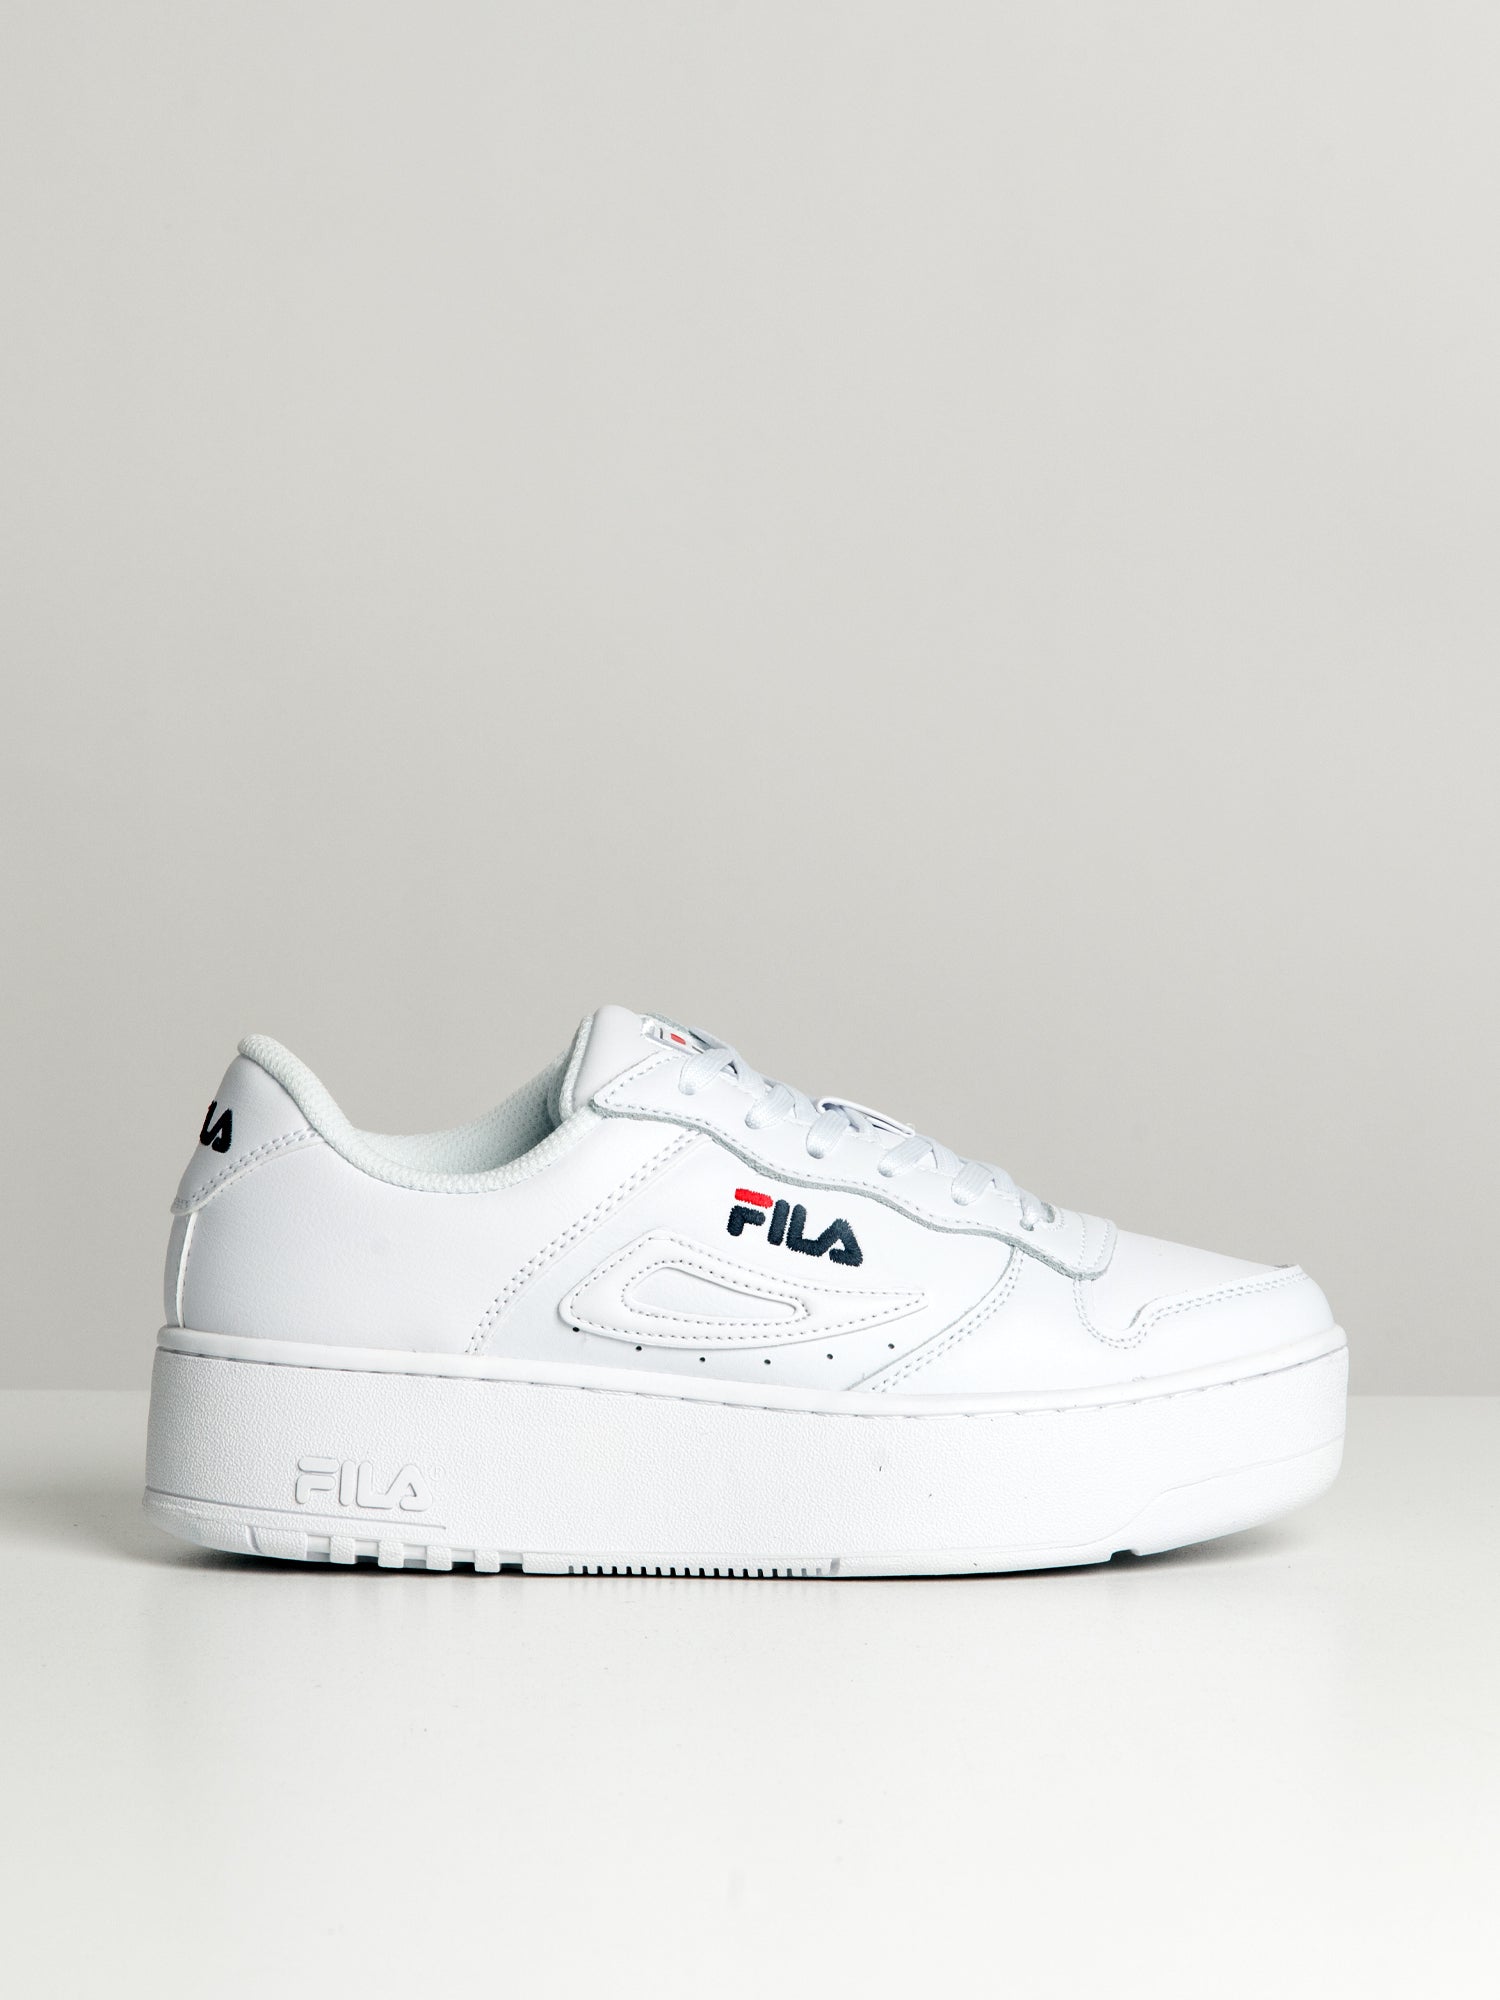 FILA Women's Disruptor II Premium Sneakers - Free Shipping